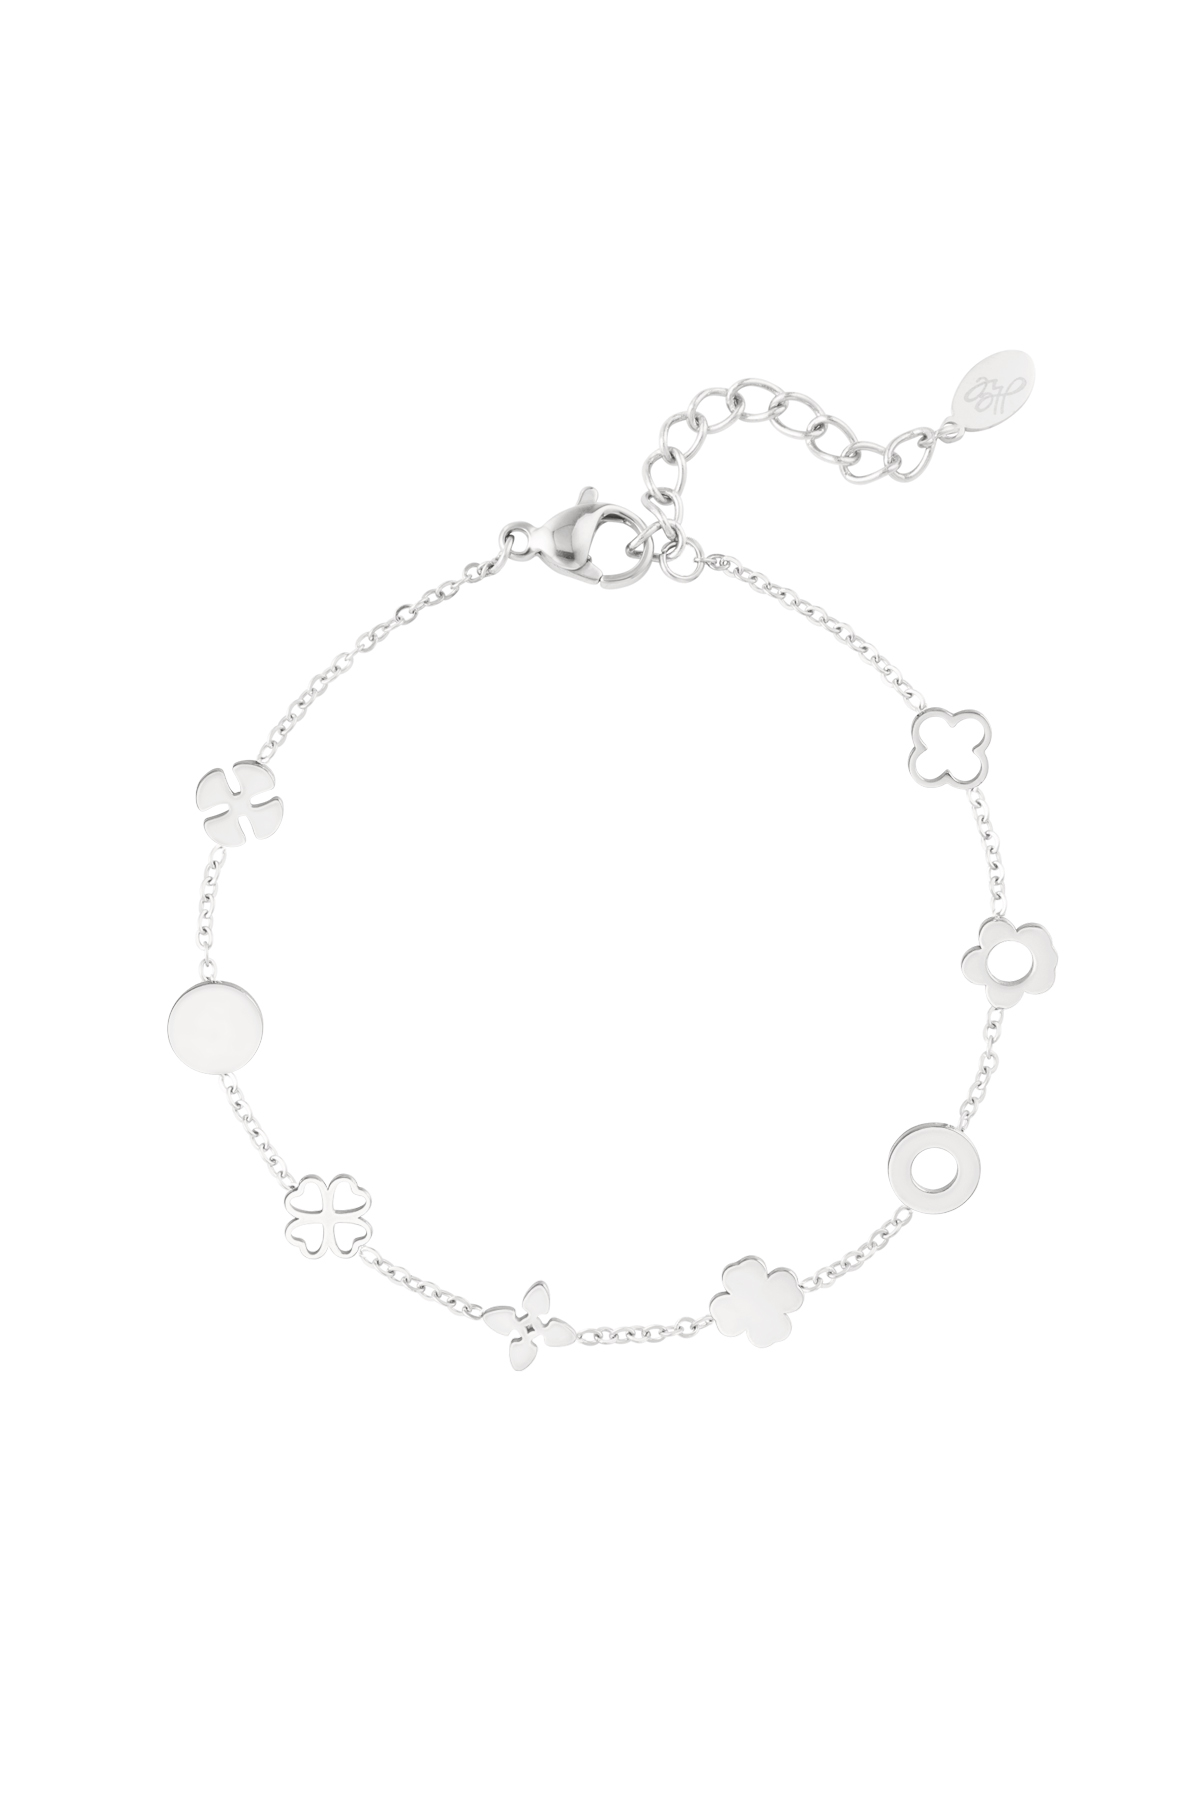 Bracelet charms - silver 